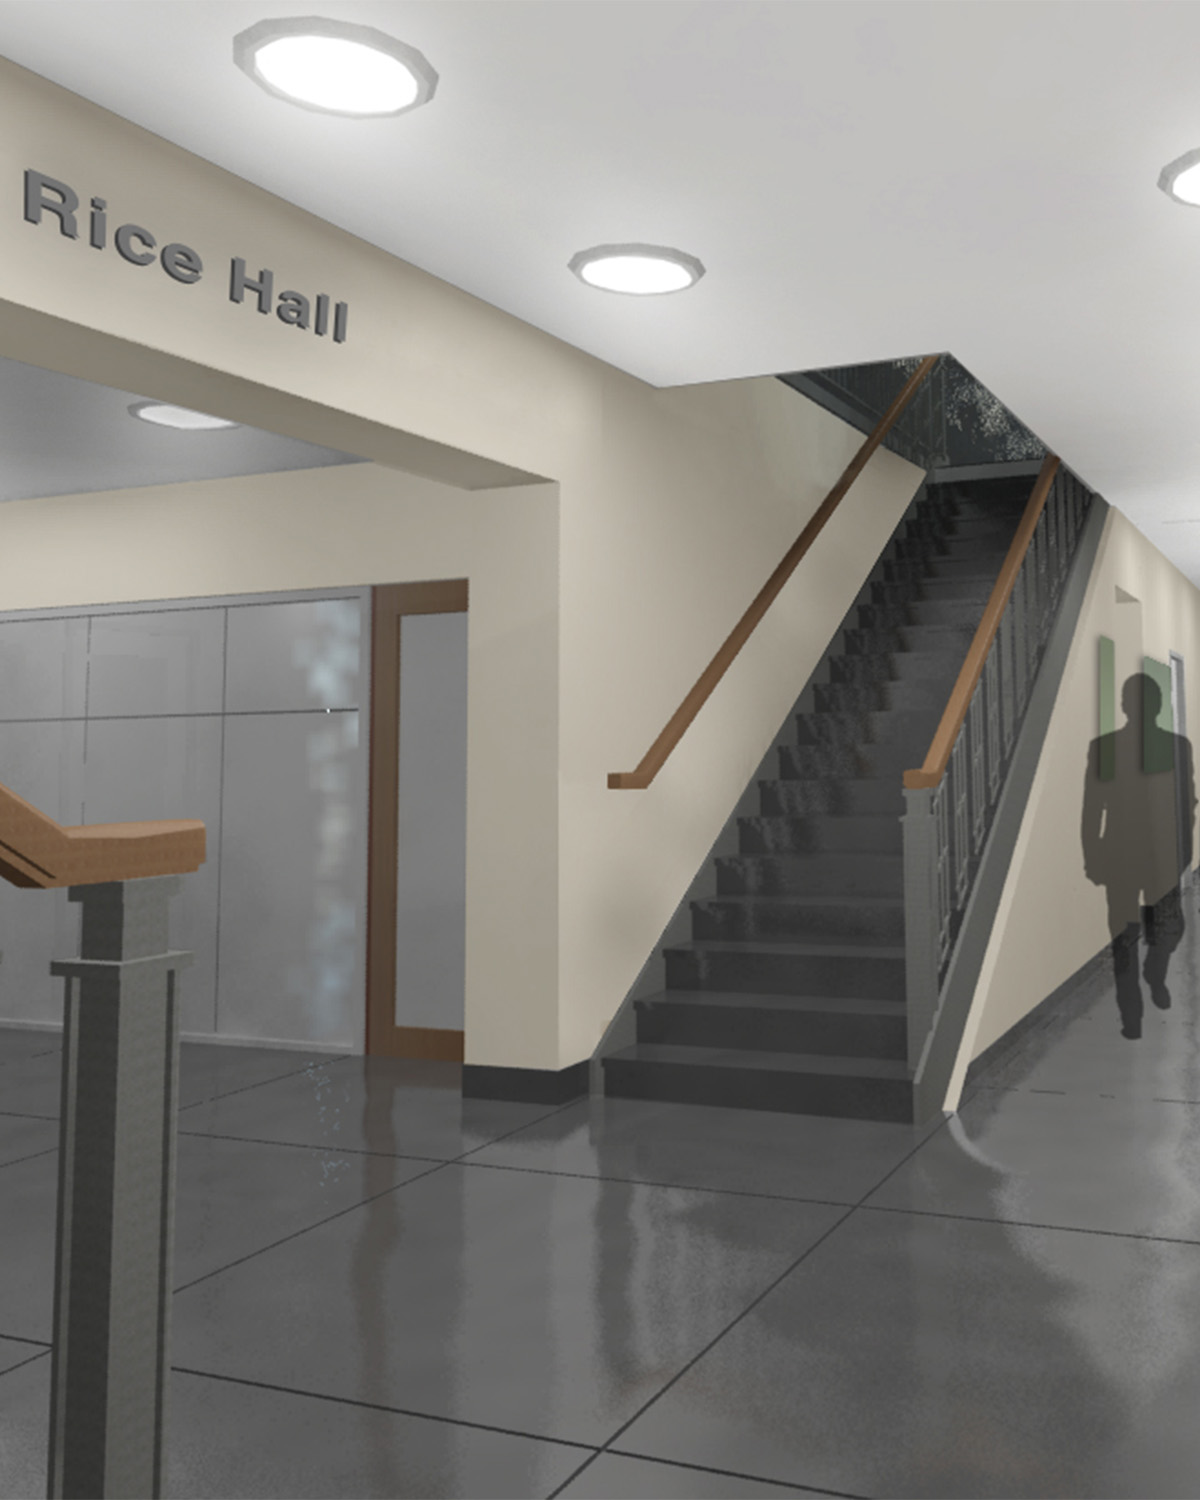 Cornell University Rice Hall staircase